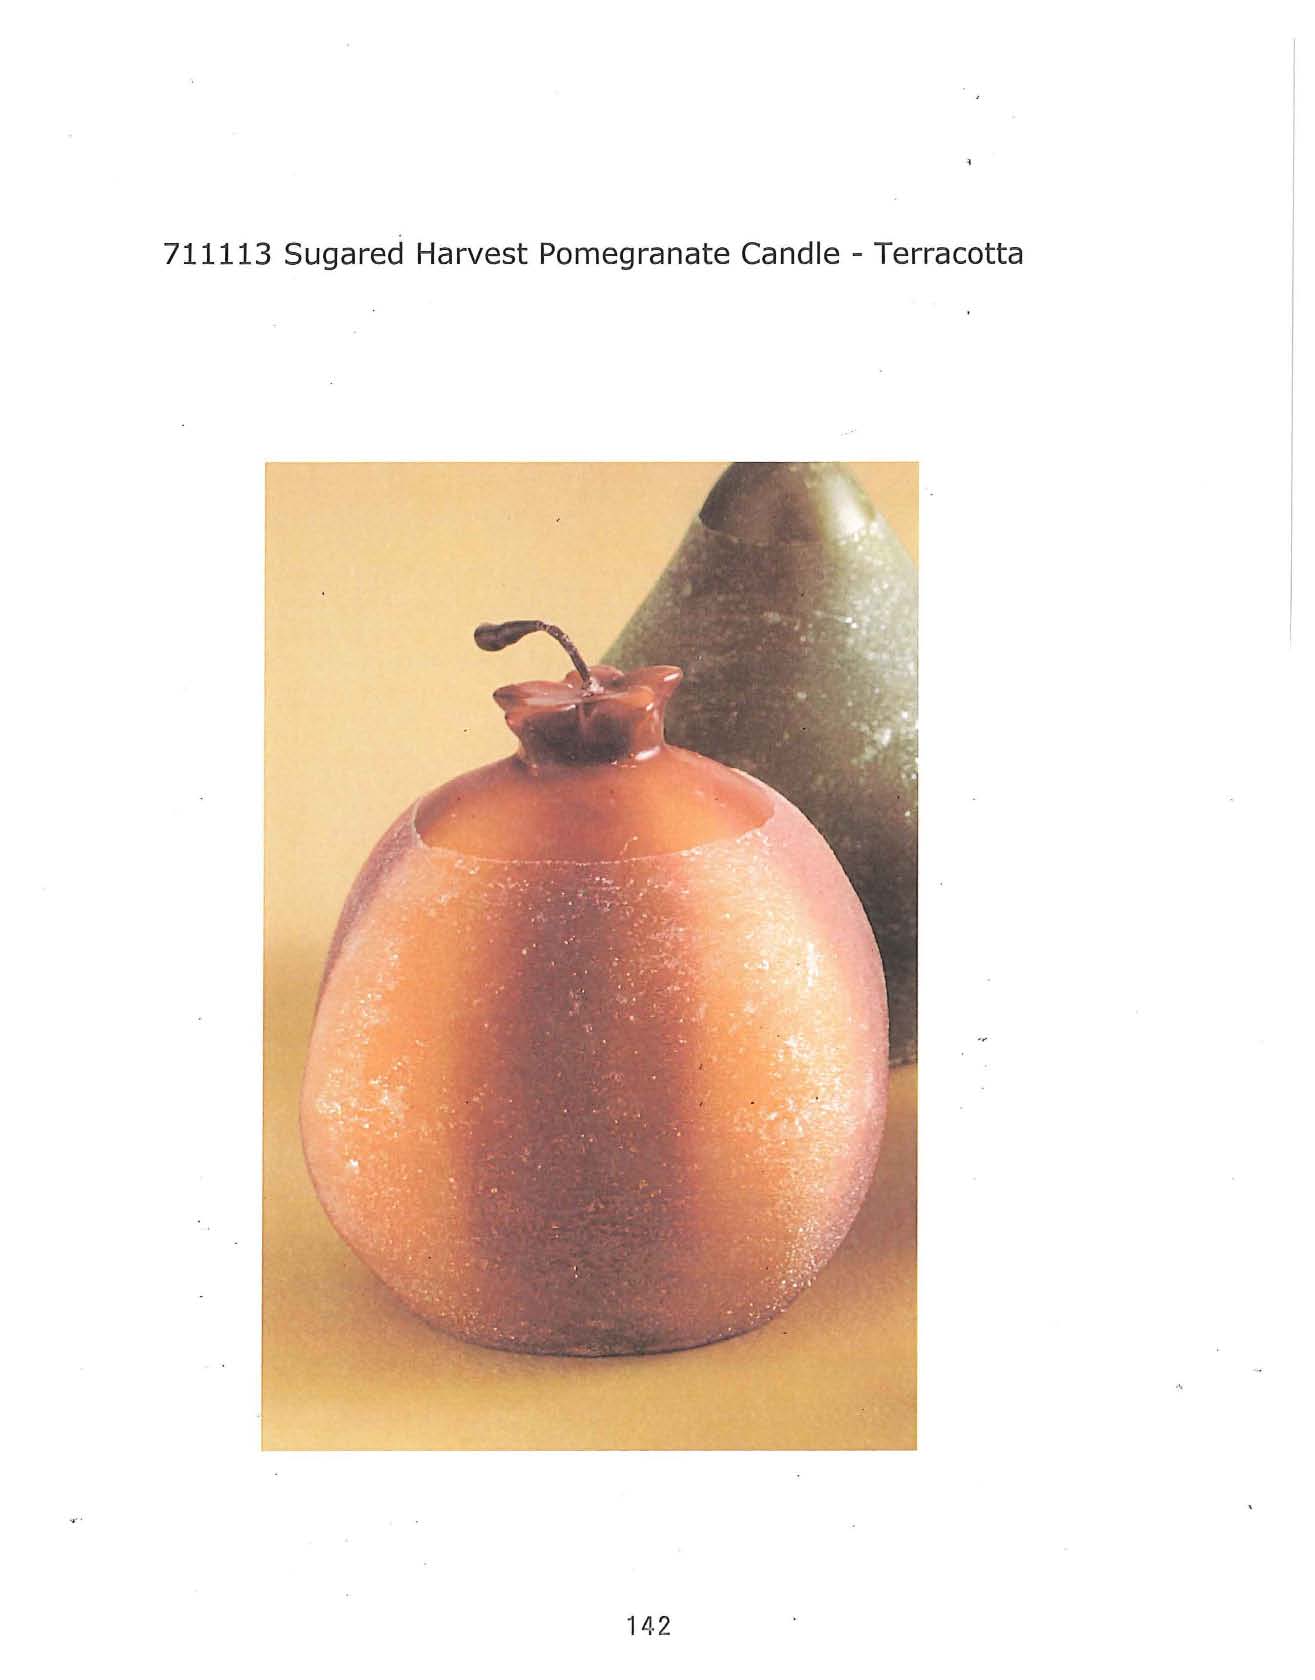 Sugared Harvest Pomegranate Candle - Terracotta